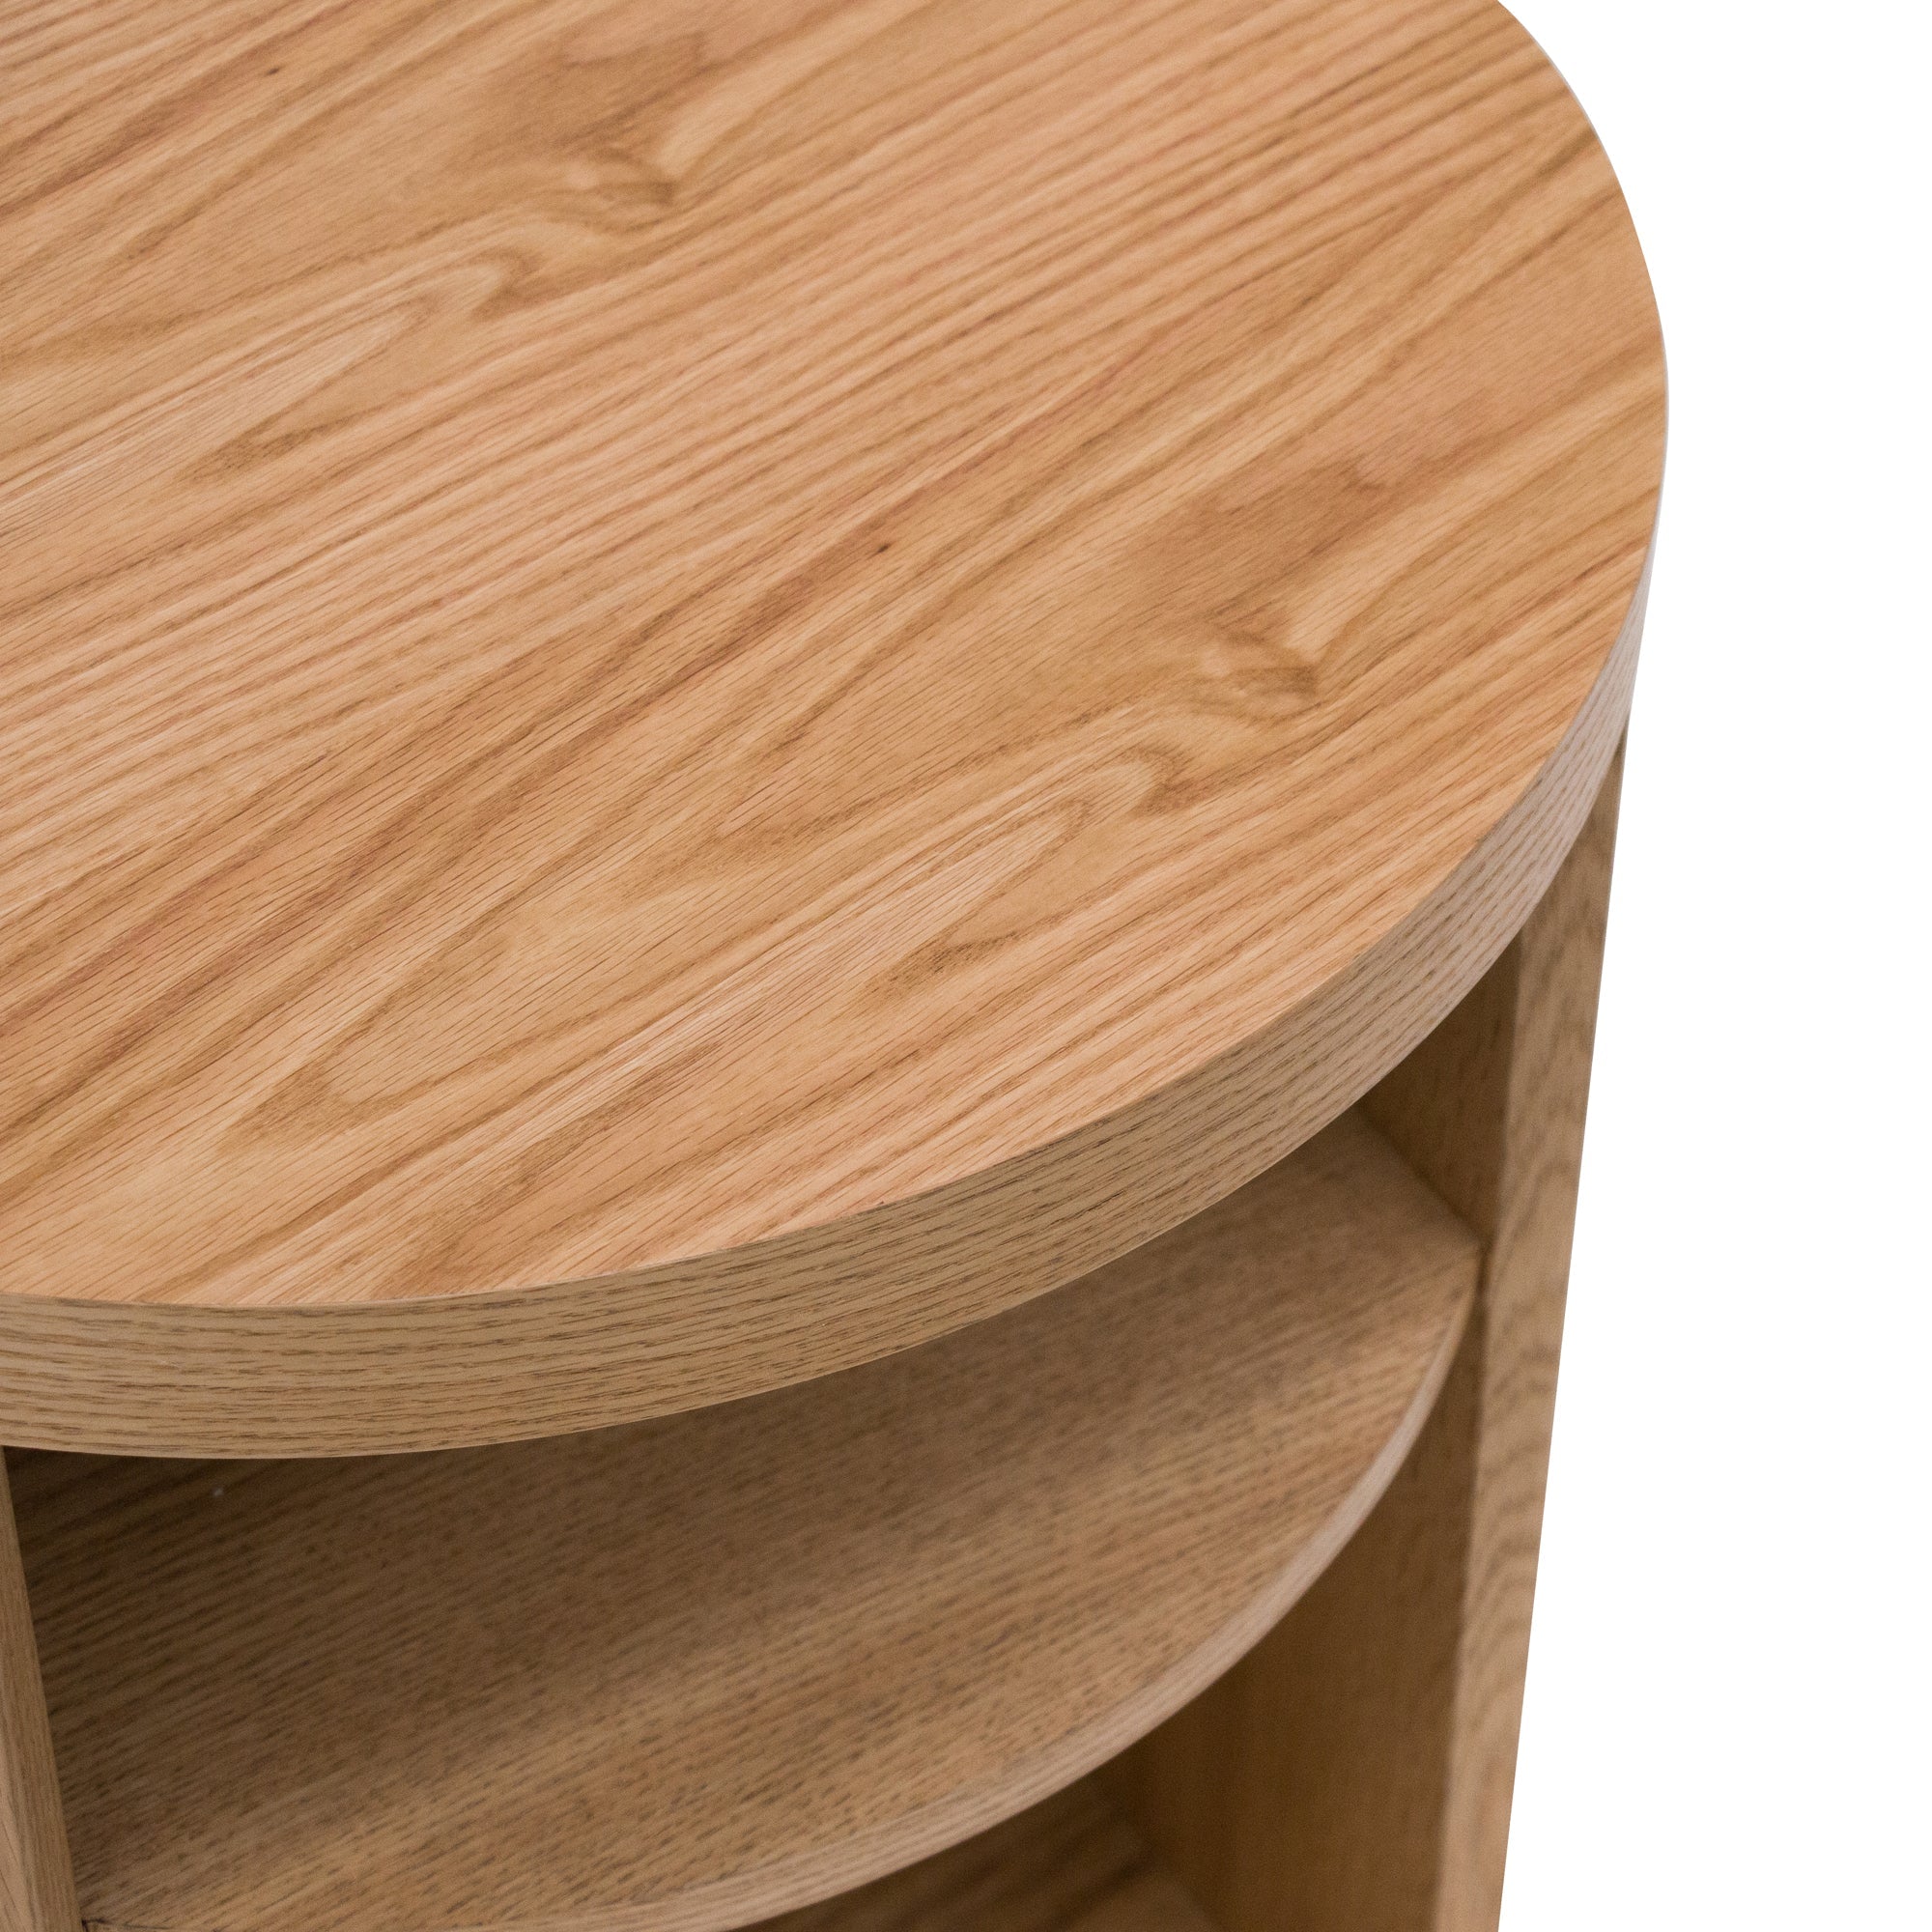 Amelia Round Wooden Bedside Table - Natural - Bedside Tables